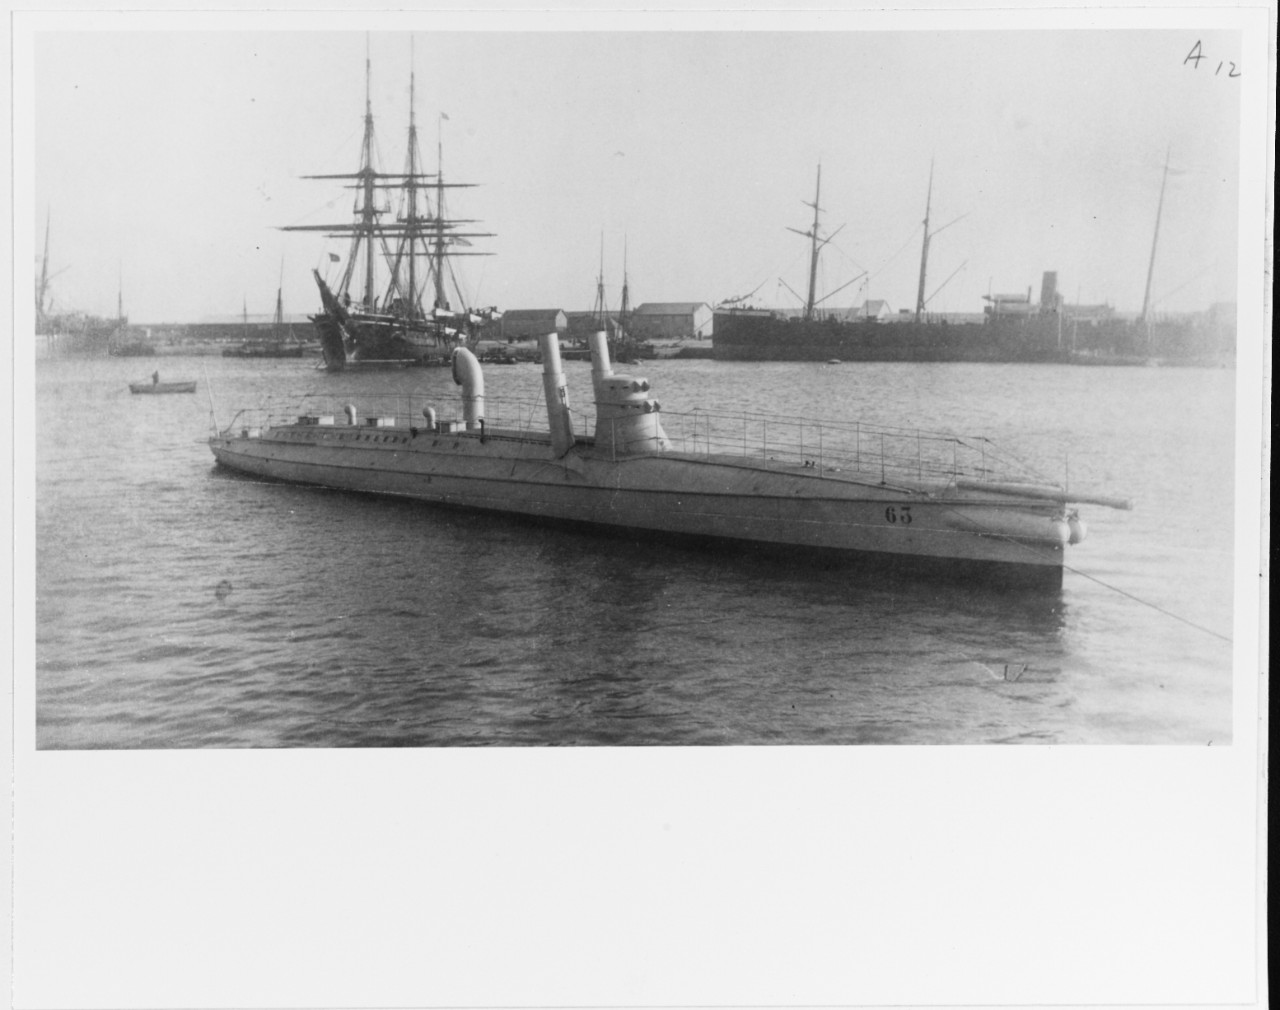 NO. 63 (French torpedo boat, 1883-1900)